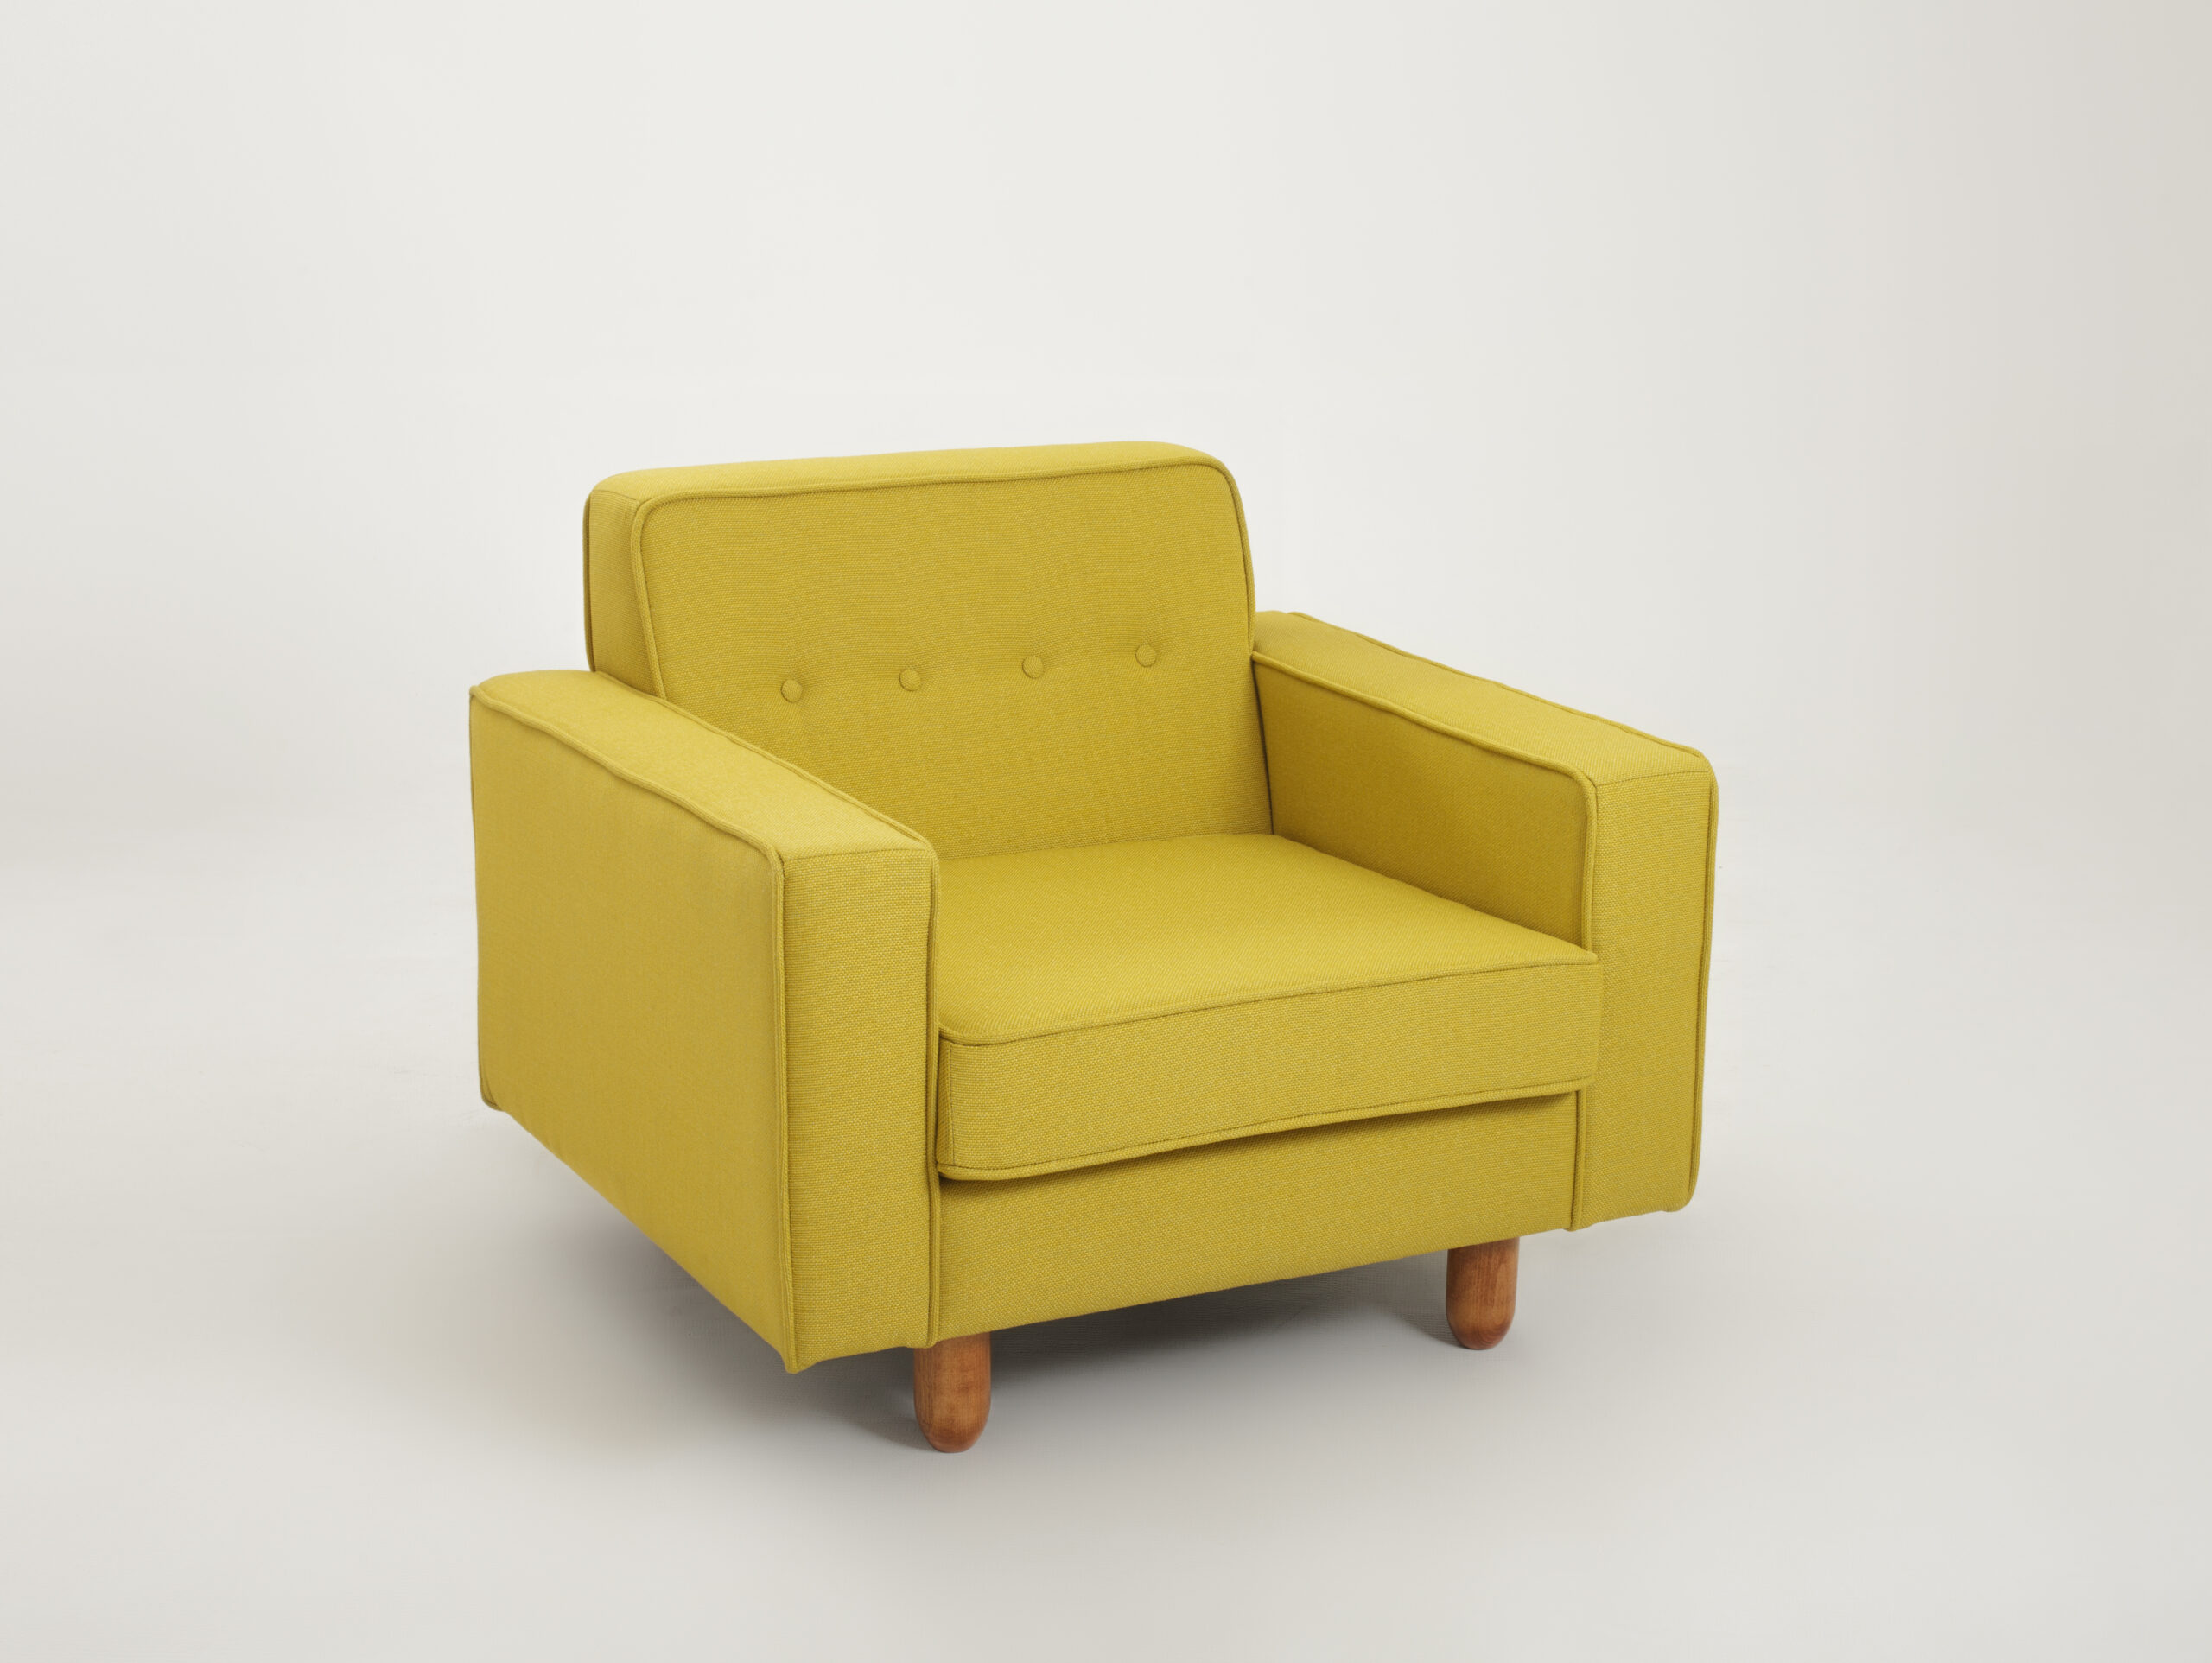 Retro Sessel gelb zugo